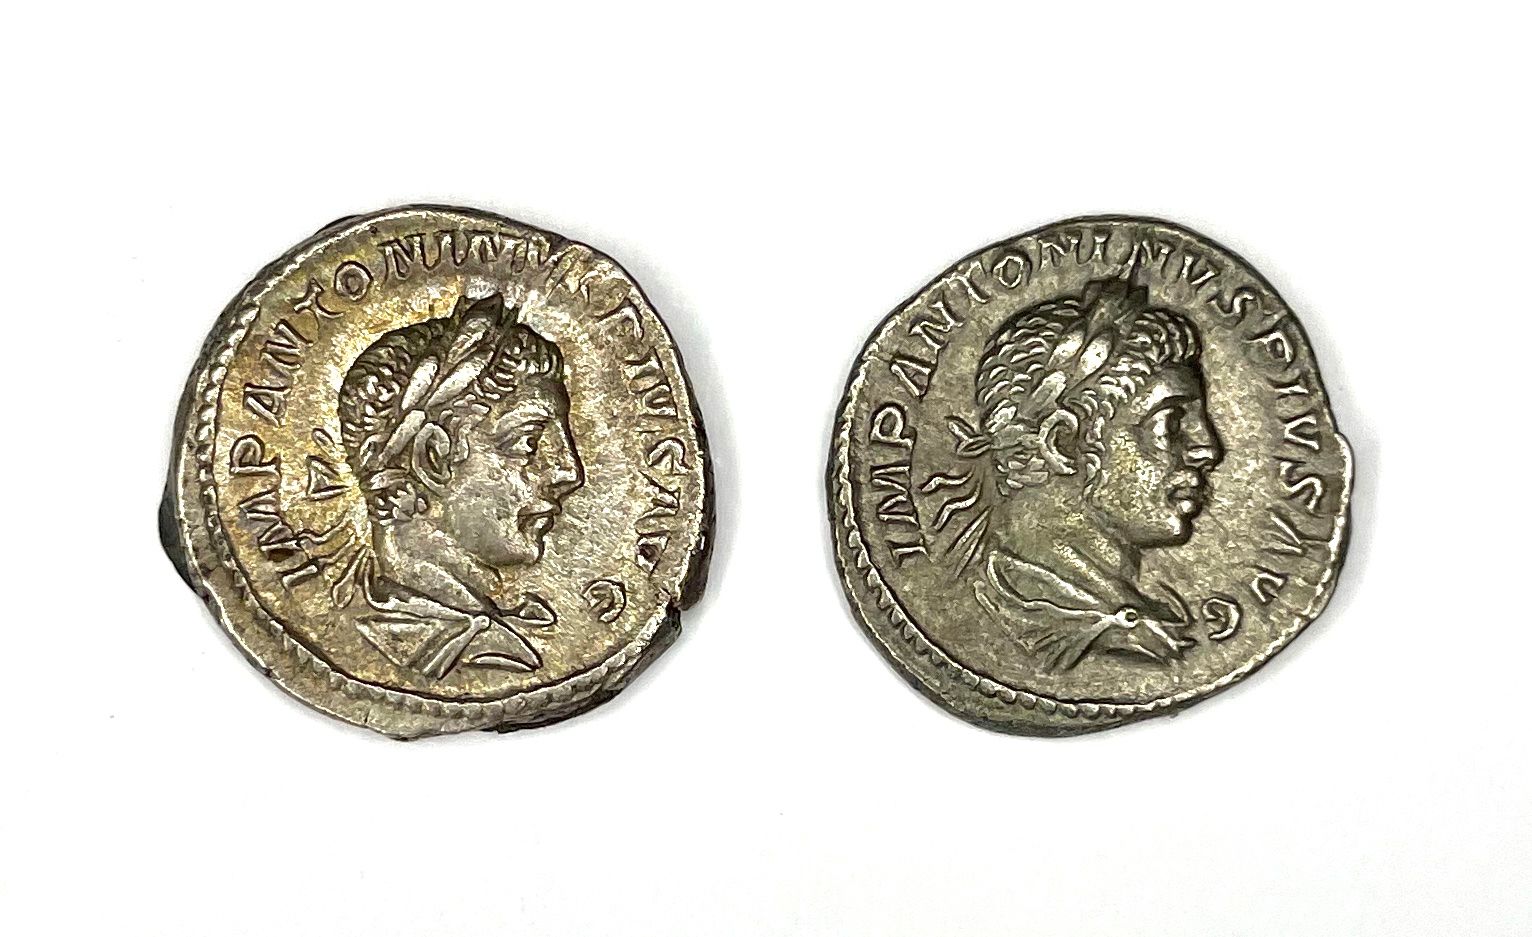 Null 罗马-埃拉加巴尔

两枚德纳里的拍品

A : 右边是埃拉加巴尔的笑脸

R: 杂项

状态：VG

重量：2.90和3.73克